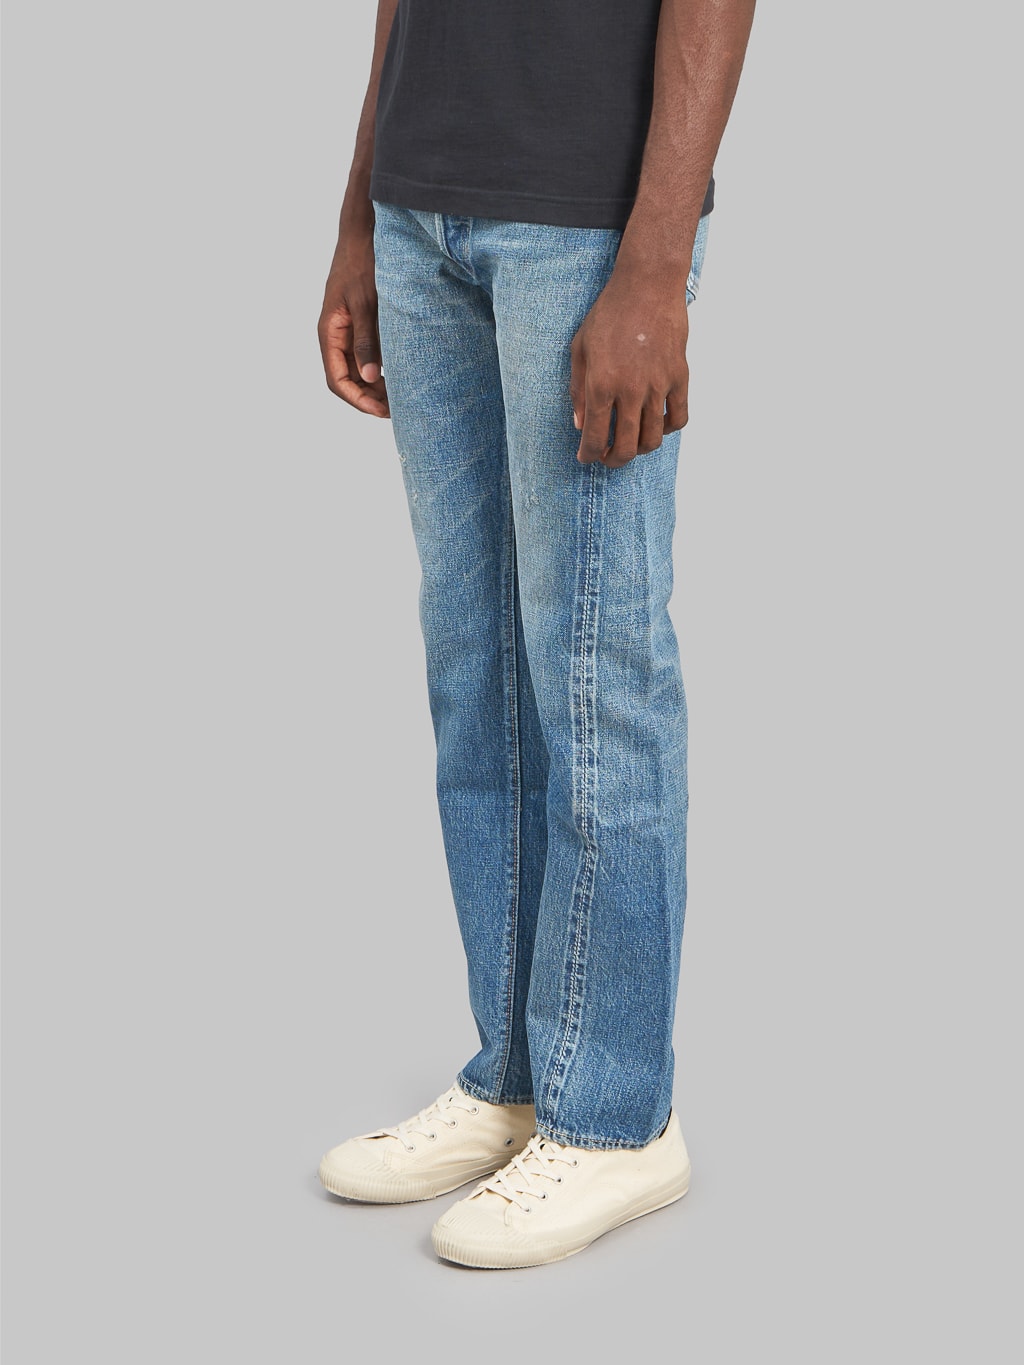 Fullcount 1108 Dartford Slim Straight Jeans side view seam